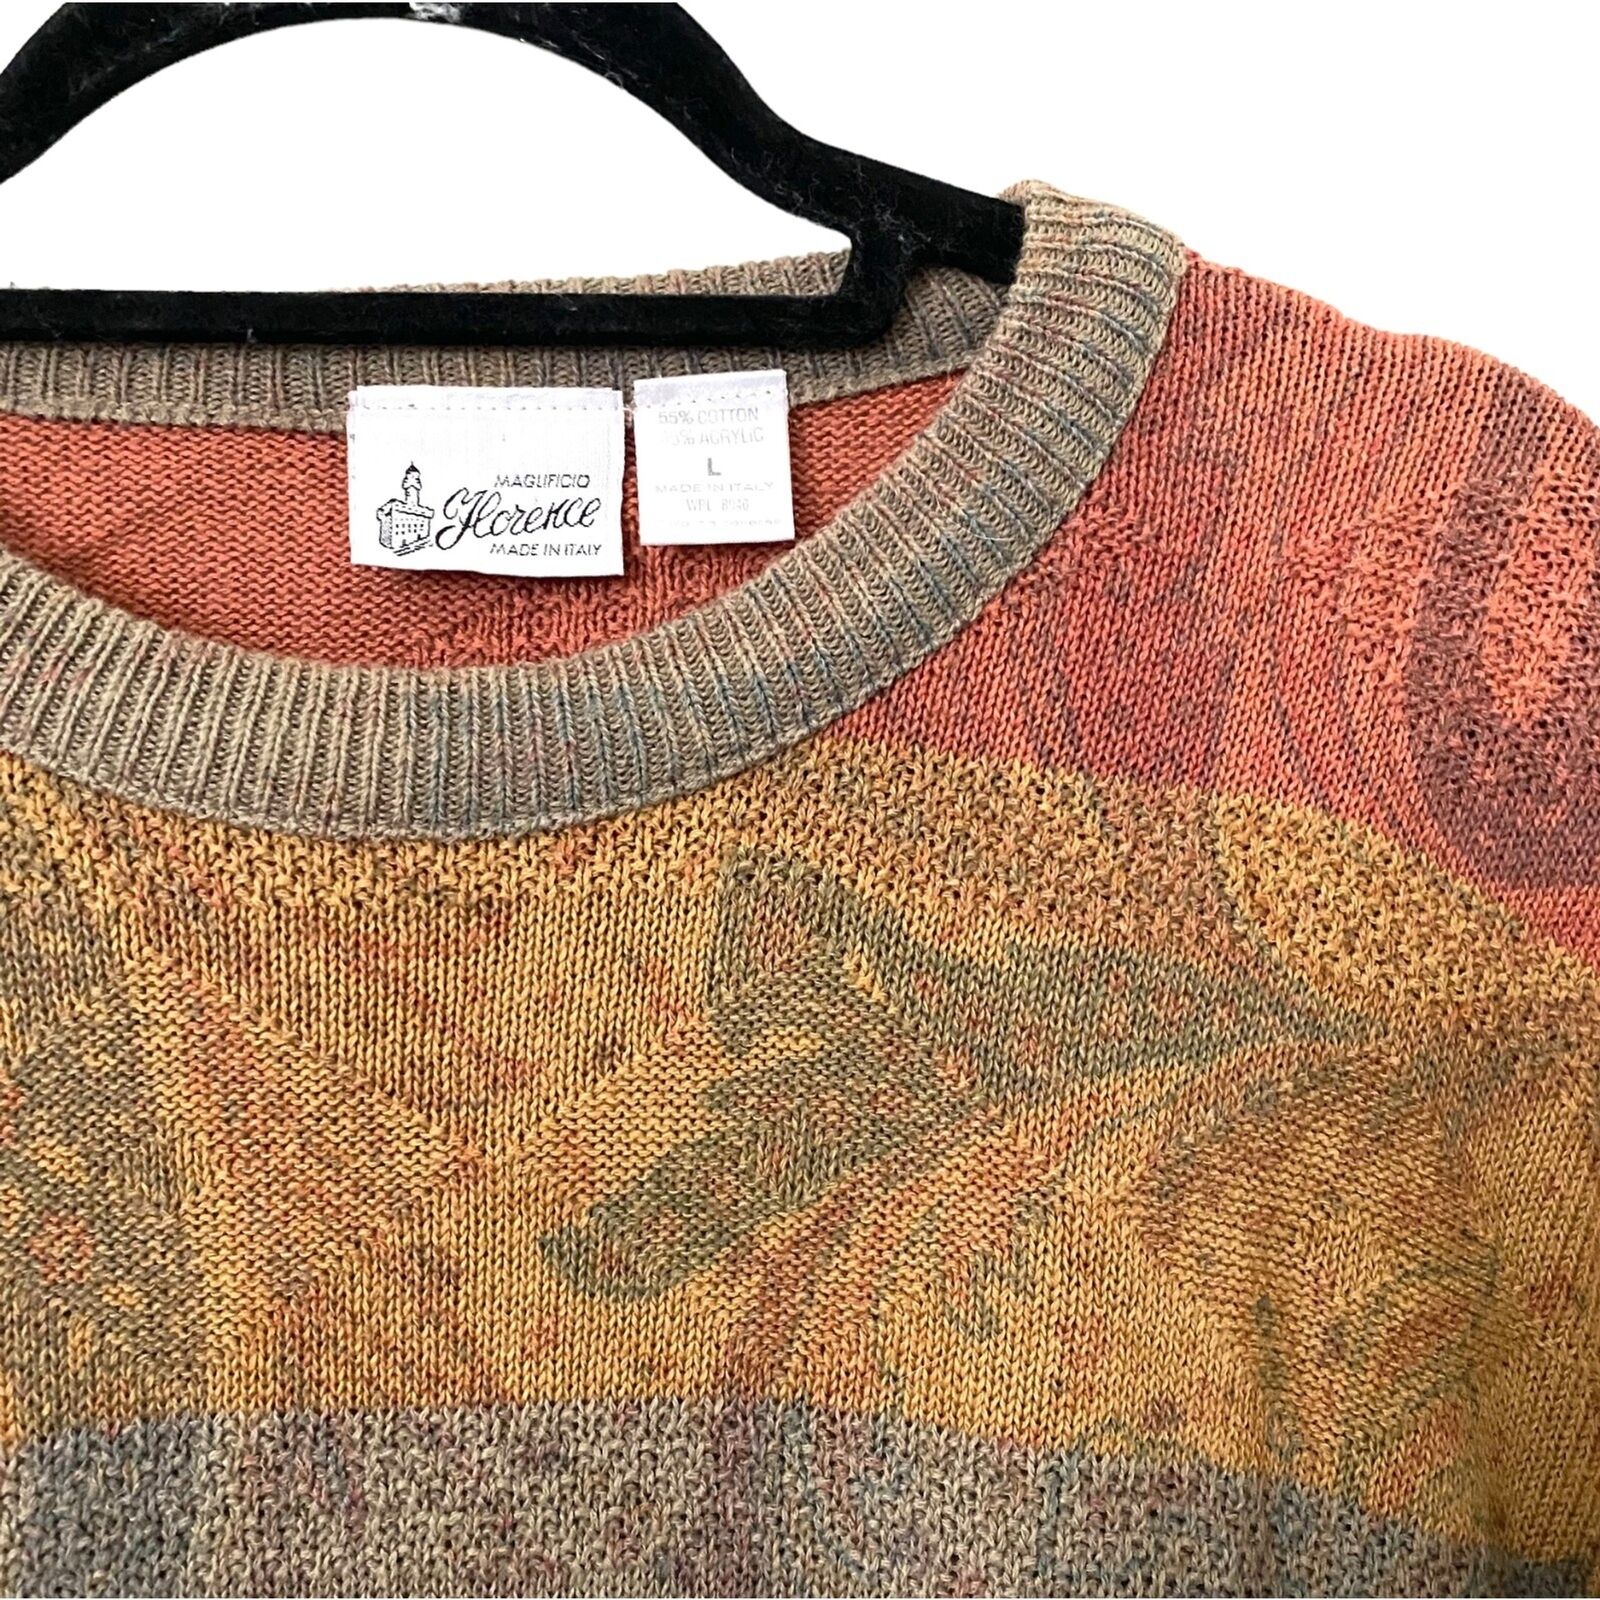 MAGLIFICIO FLORENCE Paisley Striped Sweater VINTA… - image 3